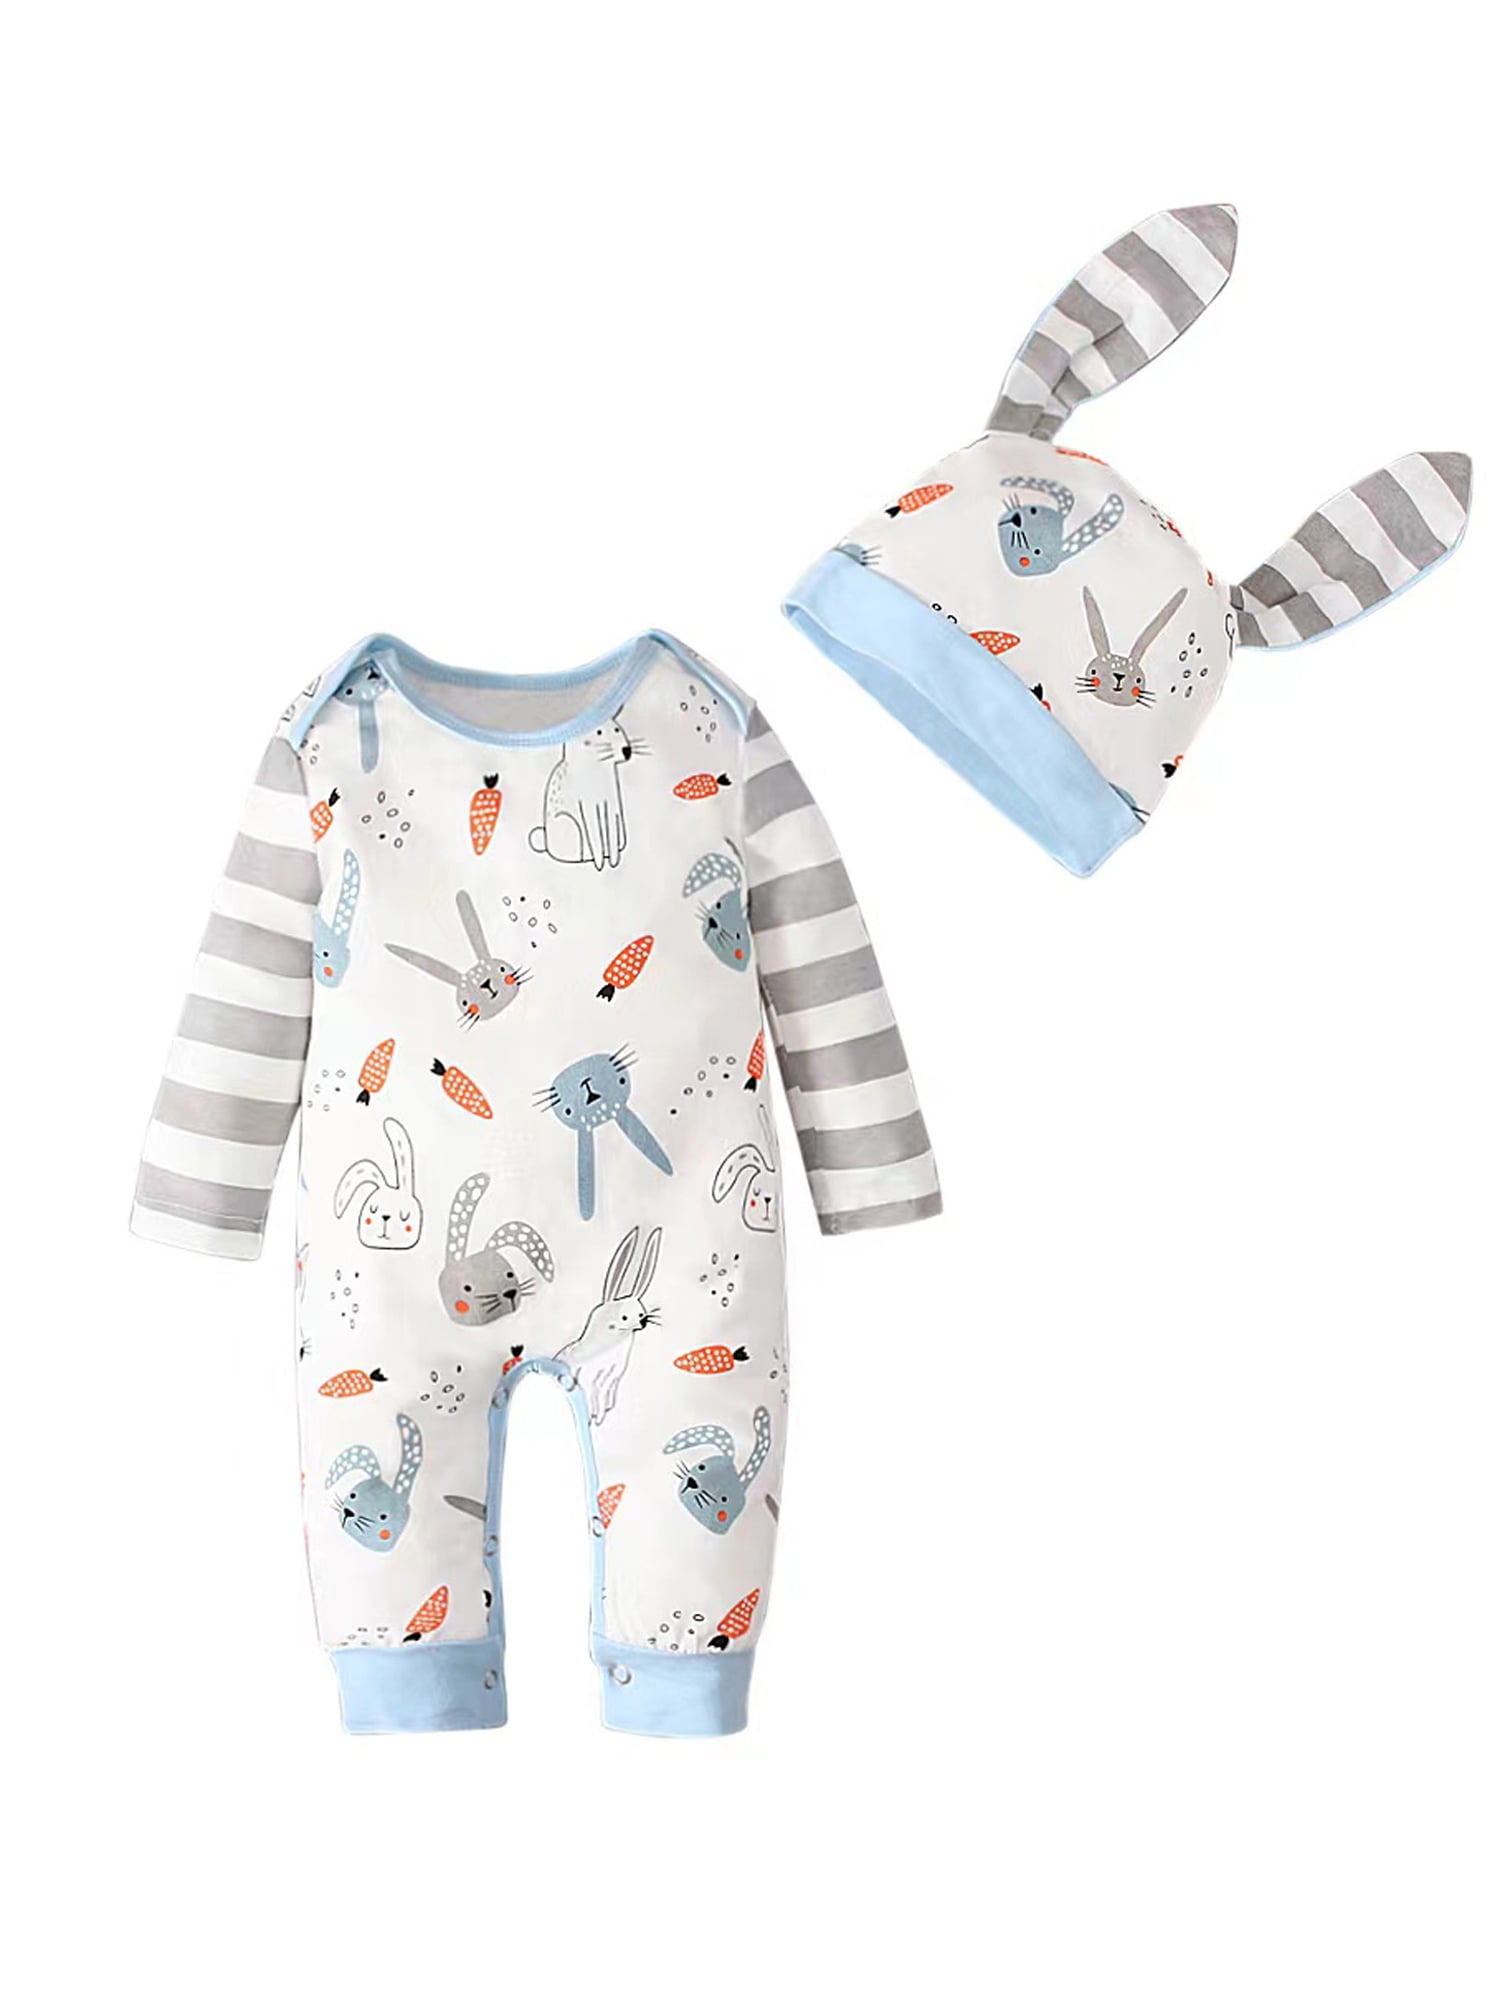 Little Boys&Girls Cotton Bodysuit Happy Easter Rabbit Print Layette 0-18 Months Infantwear Spring/Summer